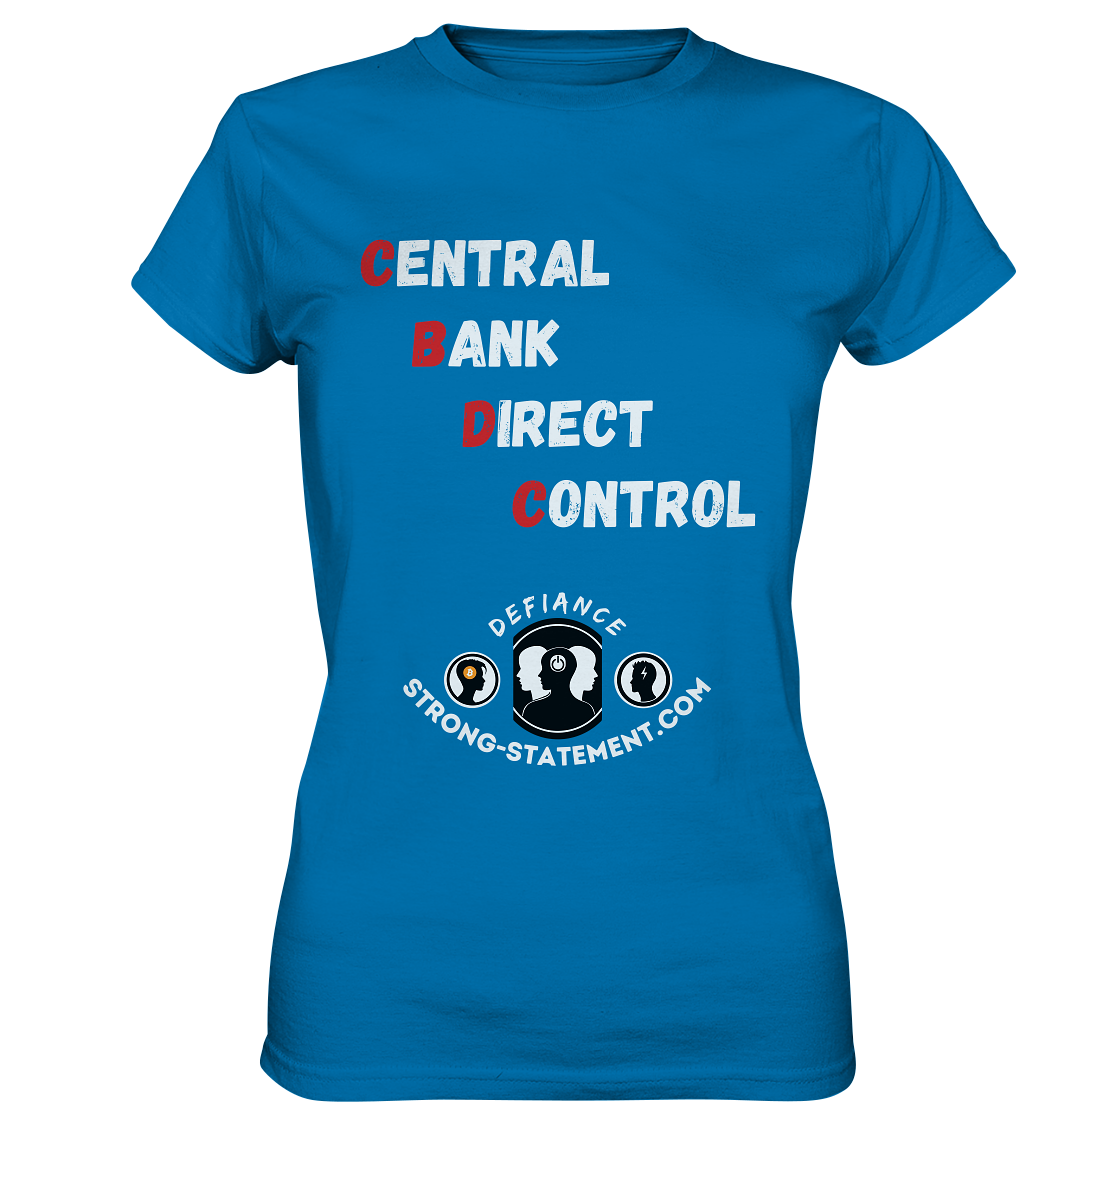 CENTRAL BANK DIRECT CONTROL -DEFIANCE -Strong-Statement.com (Ladies Collection 21% Rabatt bis zum Halving 2024)  - Ladies Premium Shirt